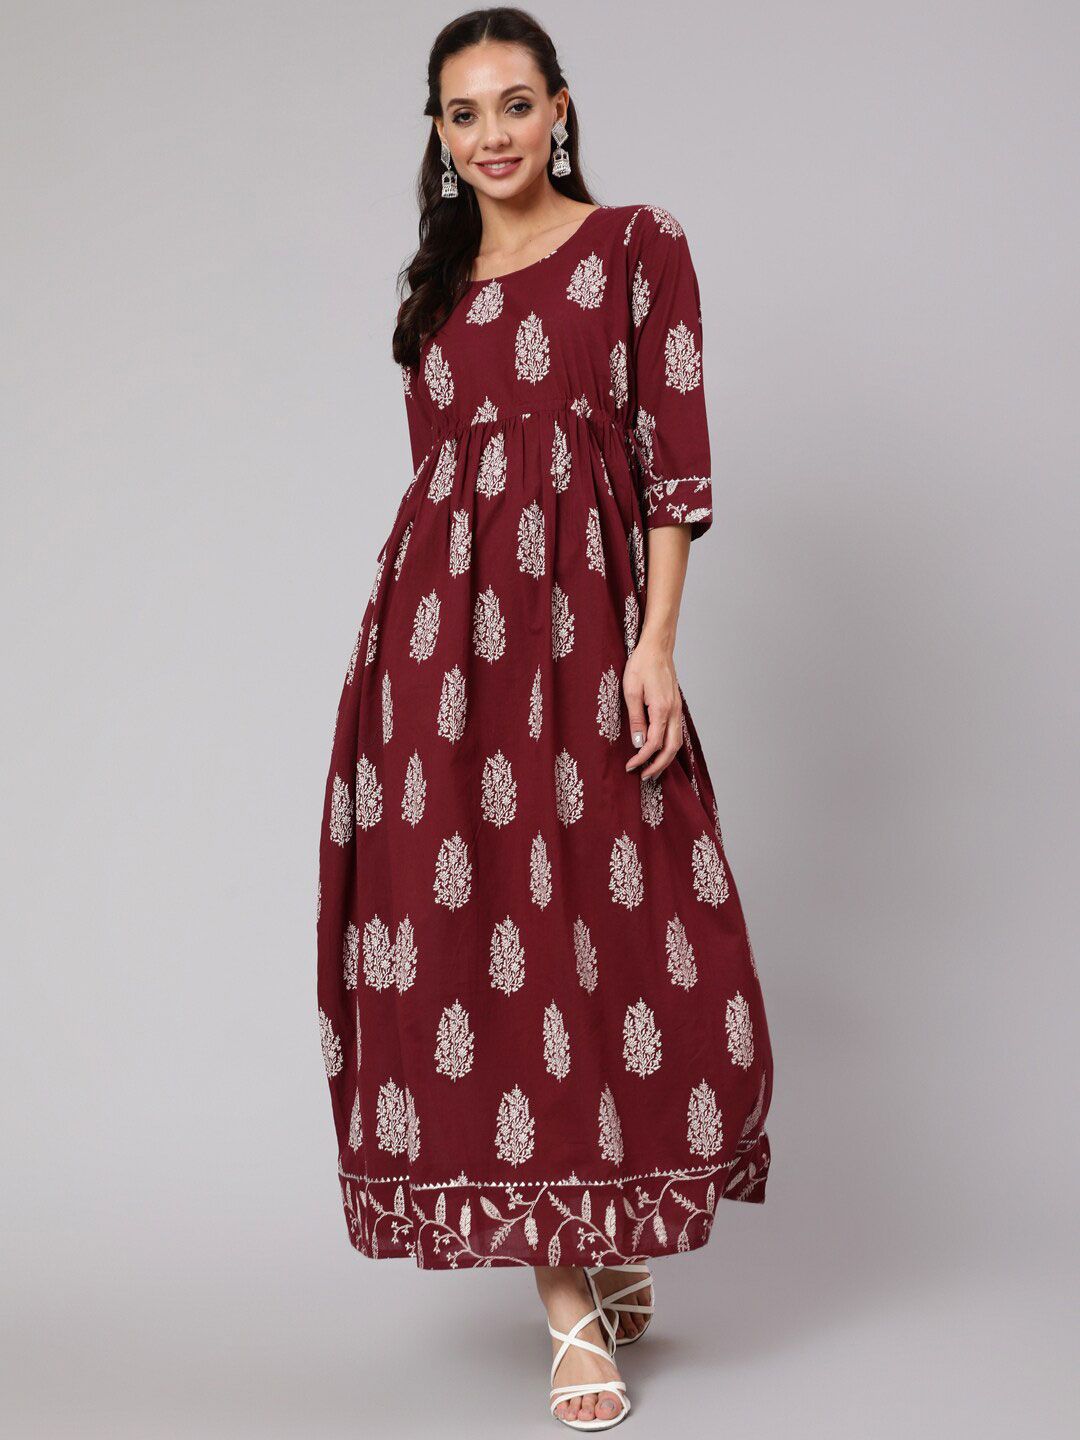 Nayo Burgundy Ethnic Motifs Ethnic Maxi Dress Price in India